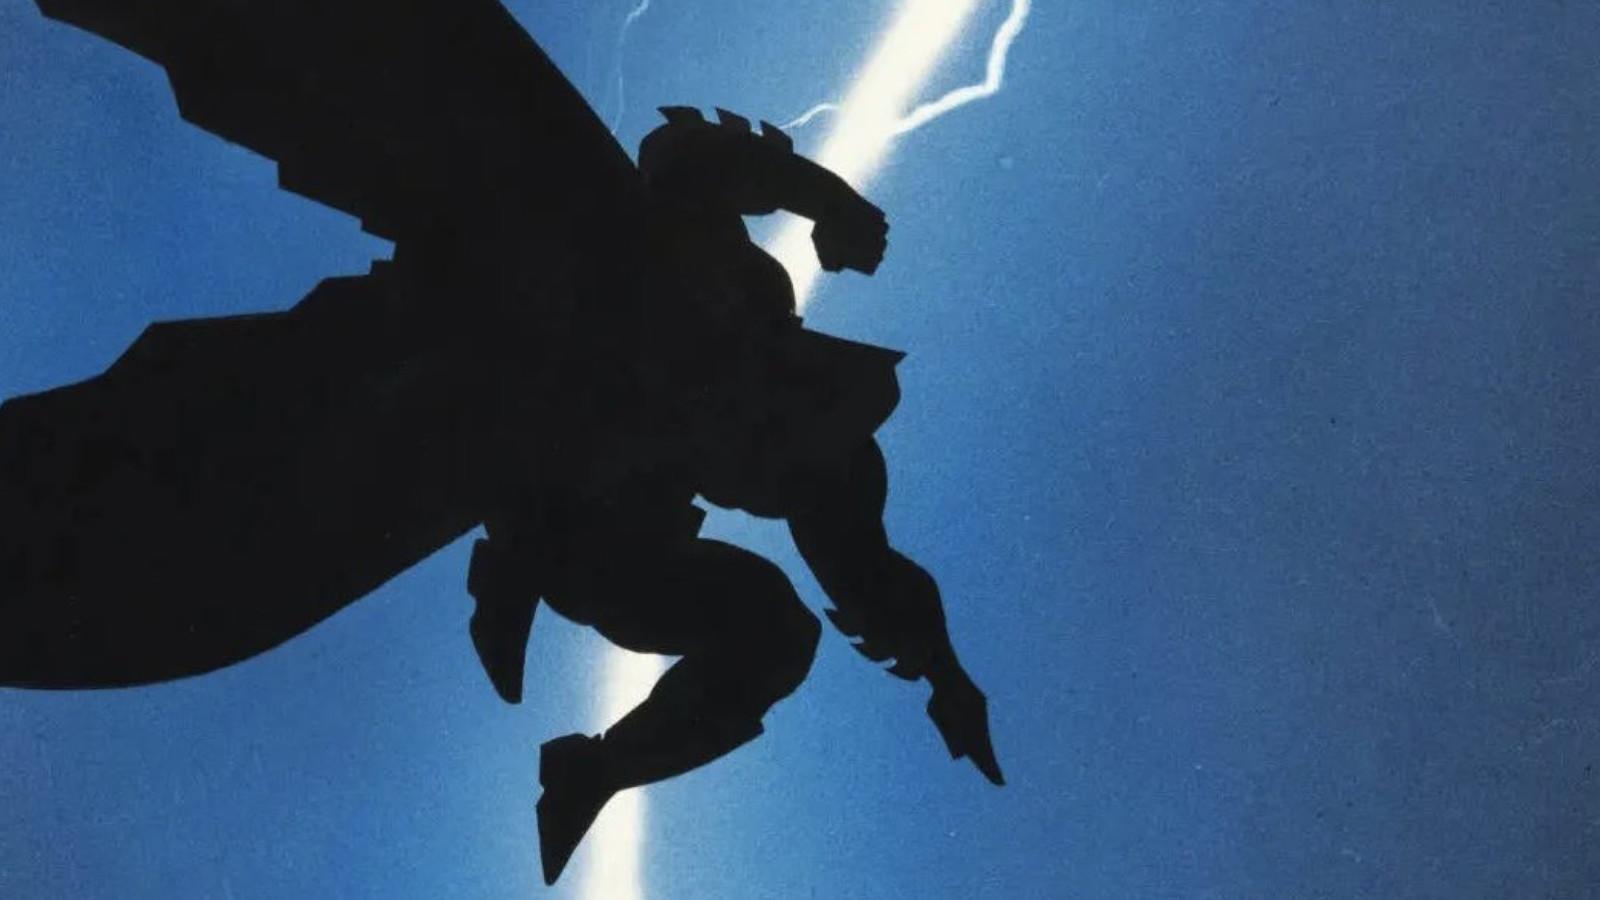 Batman Dark Knight Returns #1 cover art